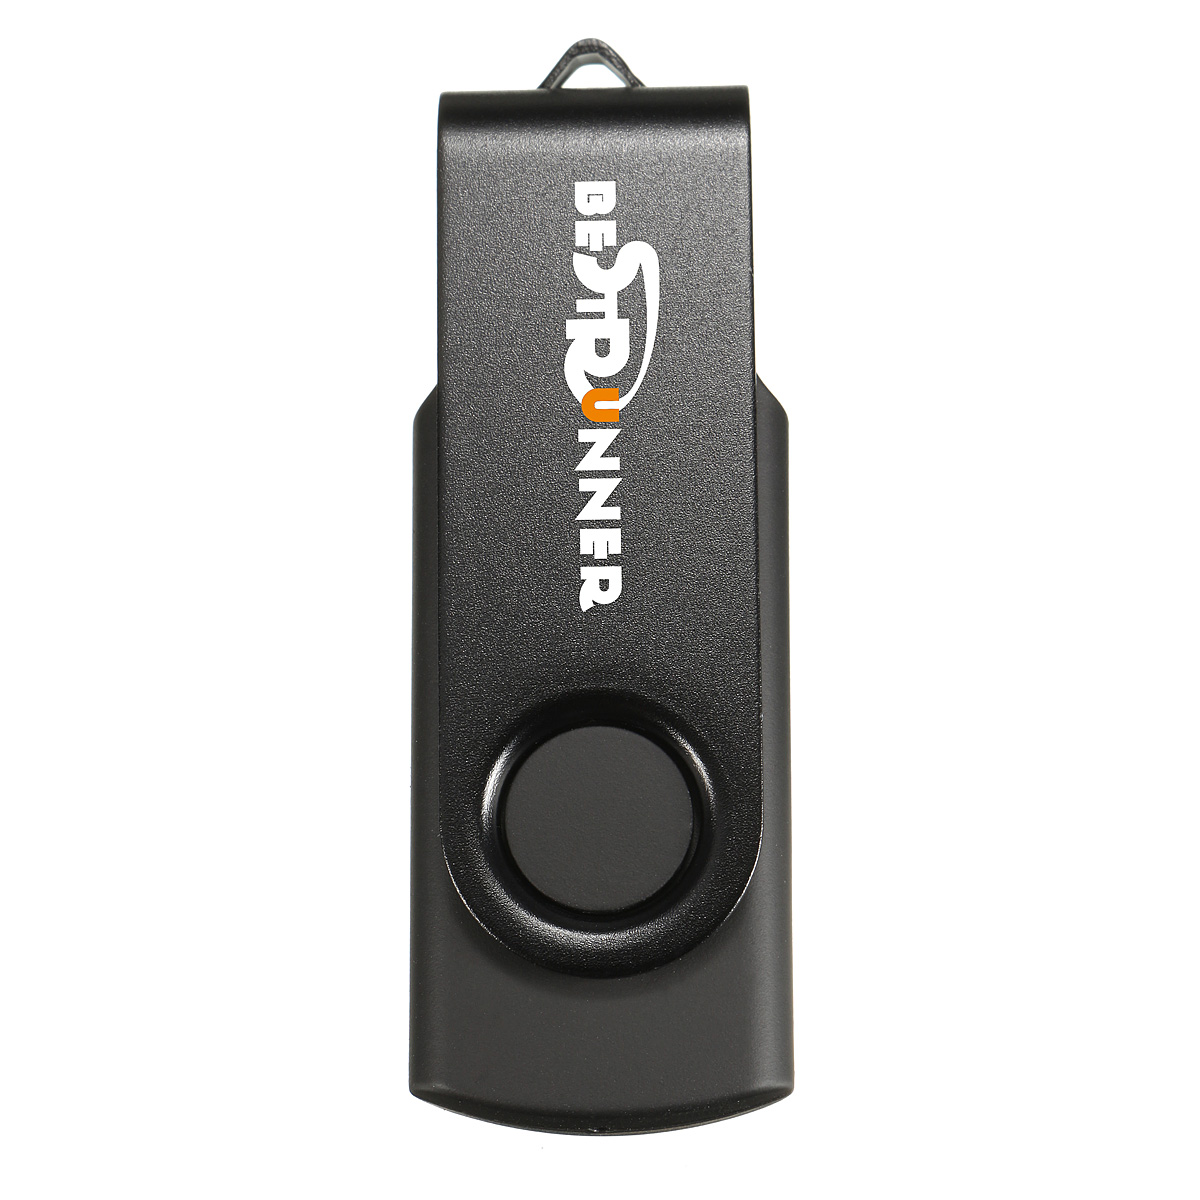 Bestrunner-2GB-USB-20-360deg-Rotation-High-Speed-Flash-Drive-Thumb-Memory-U-Disk-1783060-2